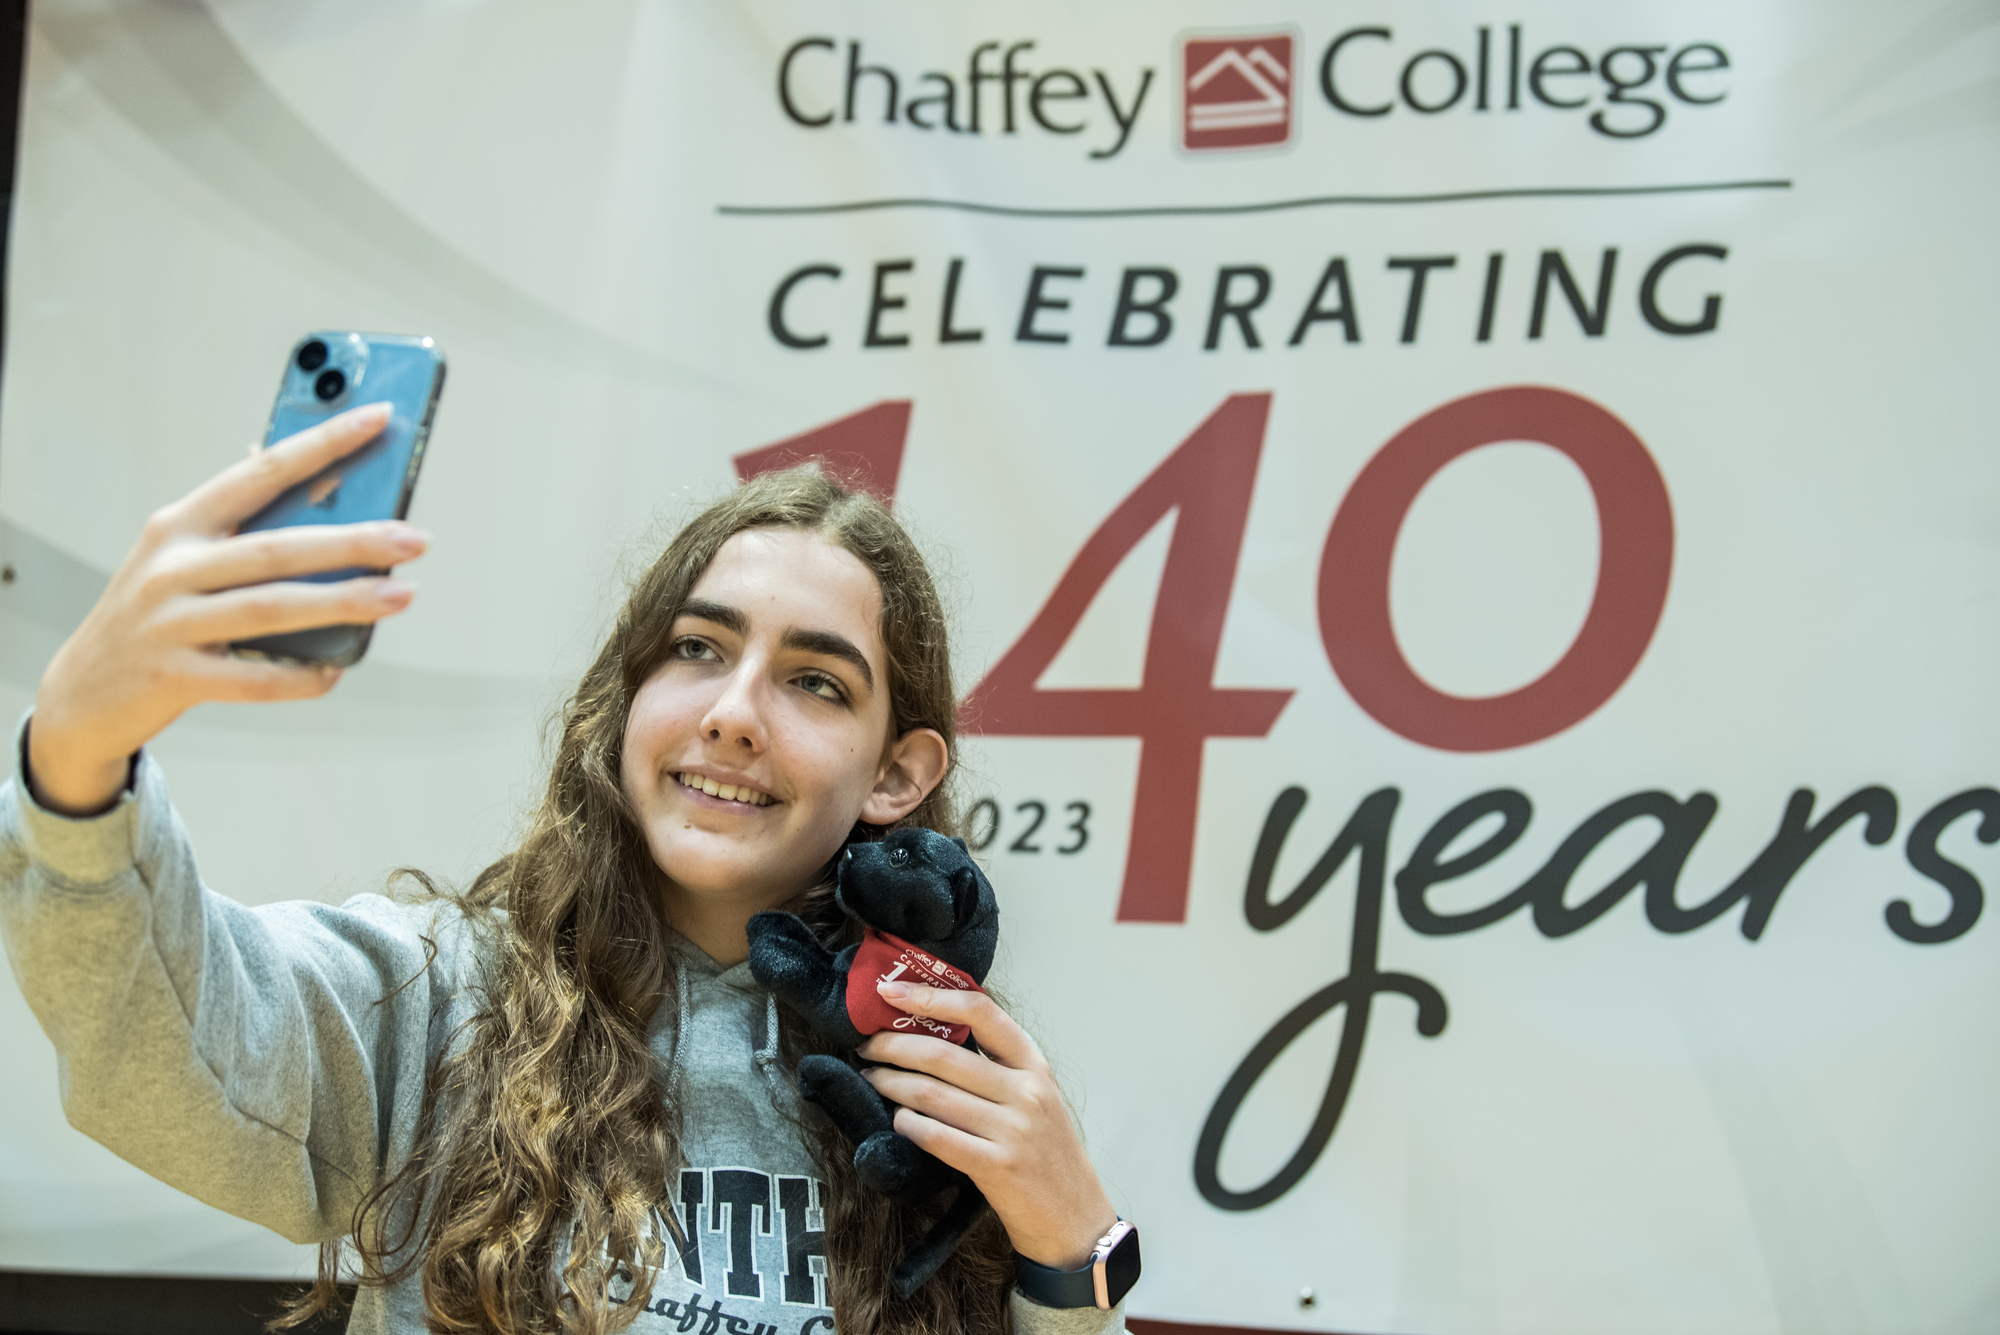 140th-anniversary-celebration-draws-900-chaffey-college